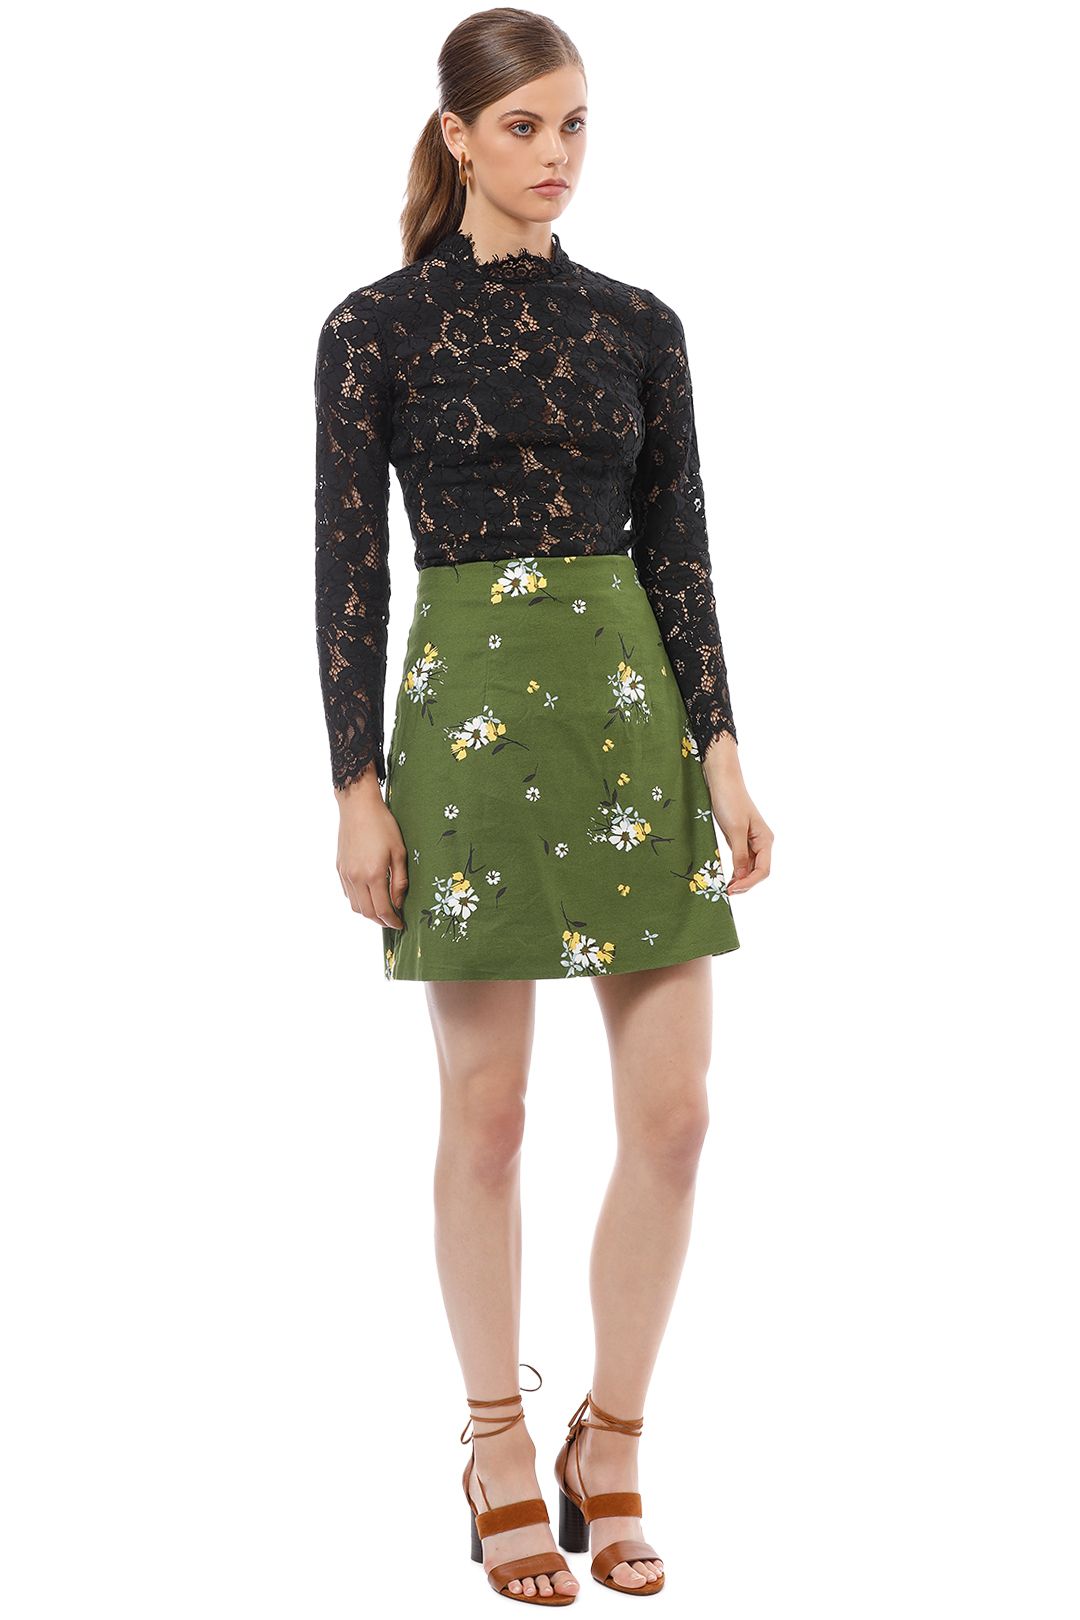 Cue - Floral Pique Skirt - Green - Side